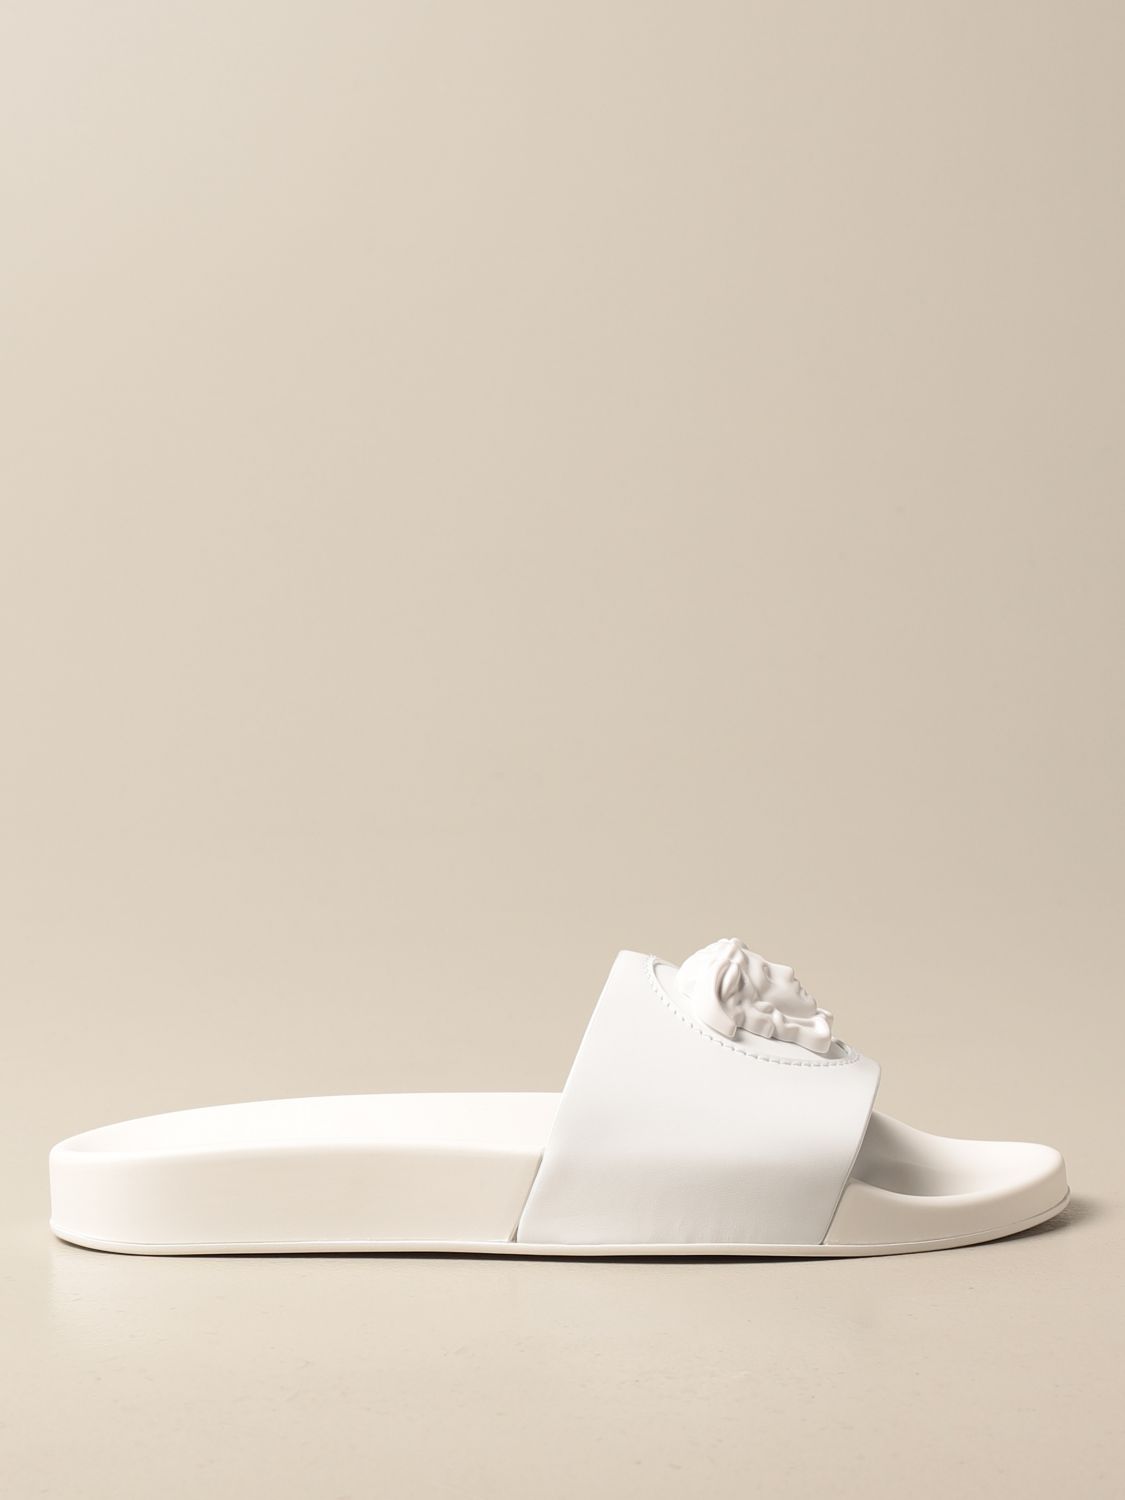 Aggregate more than 67 white versace sandals latest - dedaotaonec